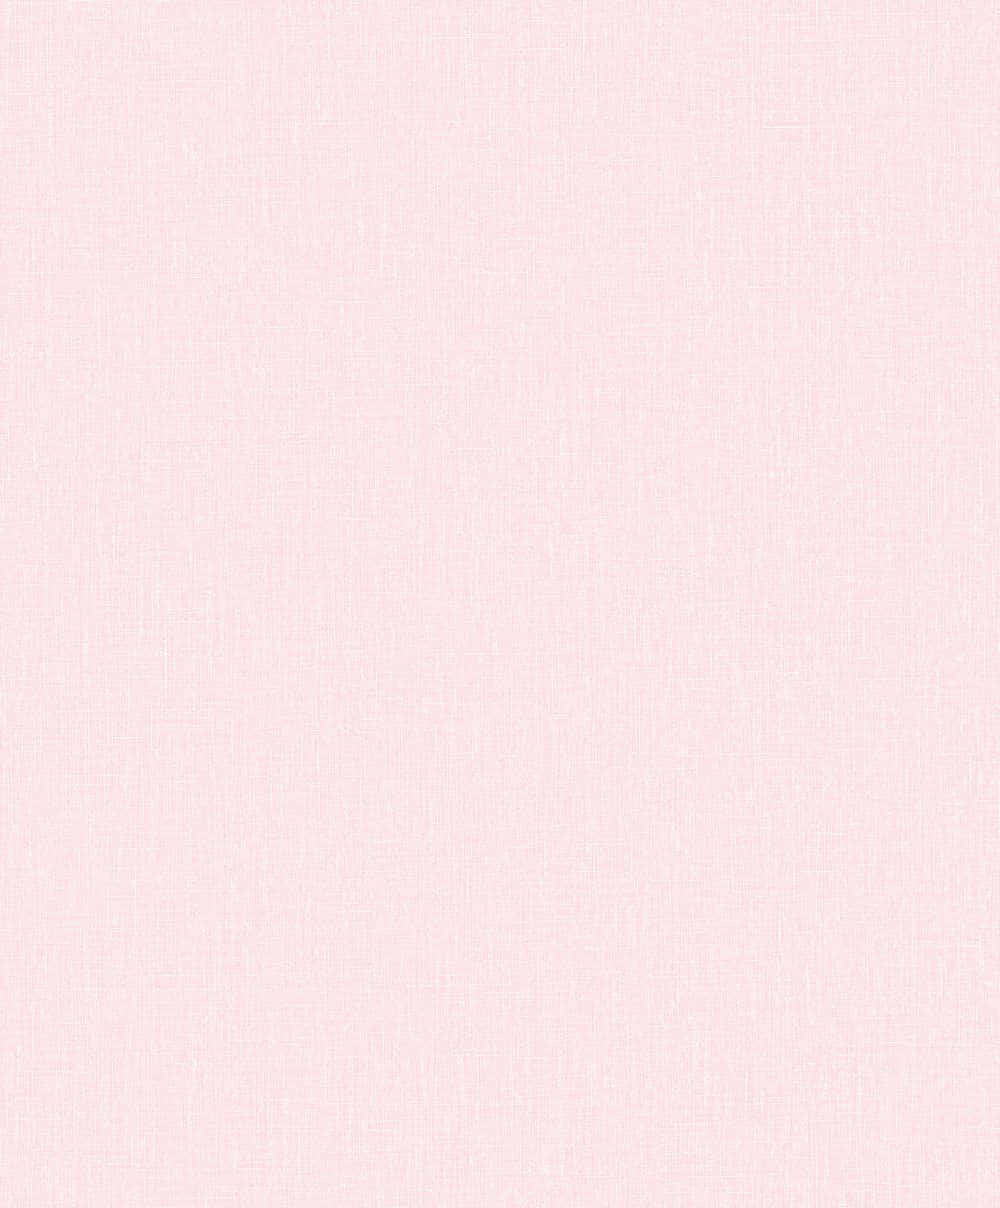 Elegance In Simplicity: Pastel Pink Background